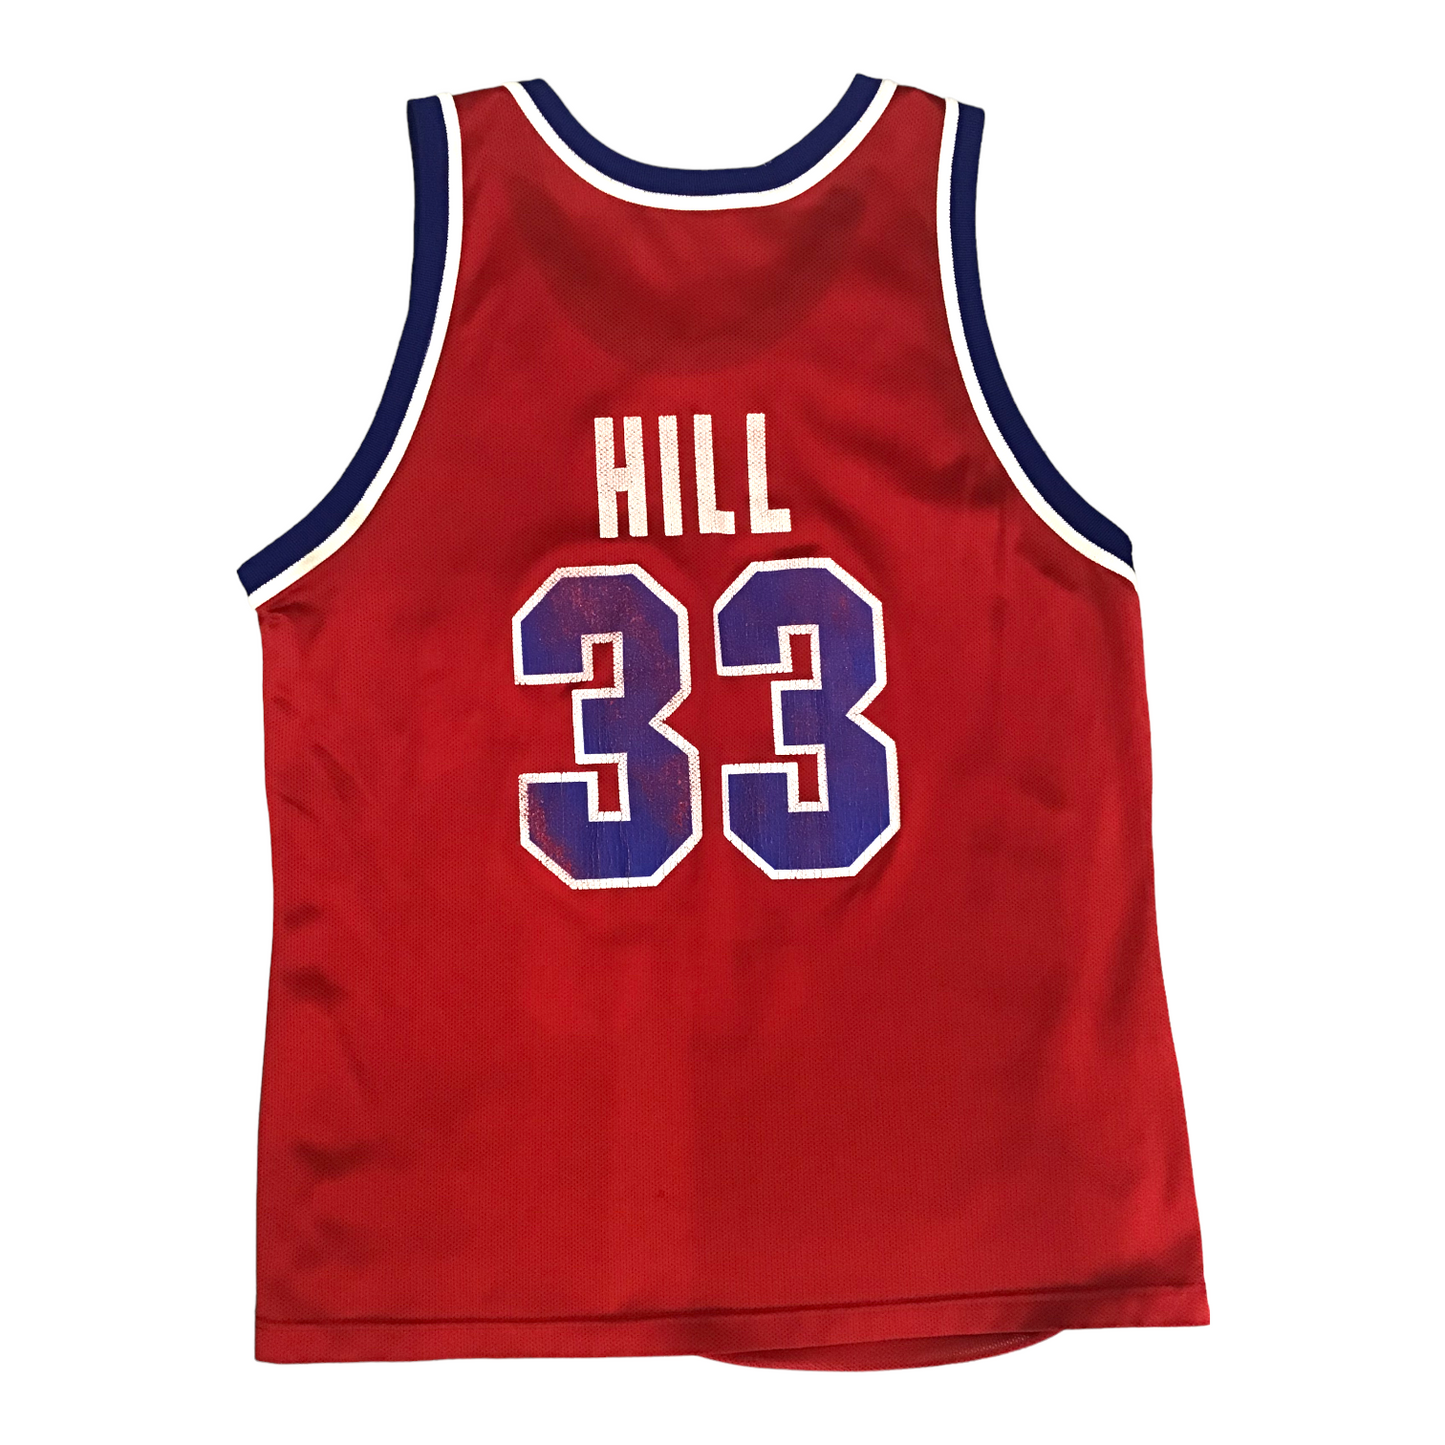 1995-96 blue Detroit Pistons Champion Grant Hill #33 basketball jersey, retroiscooler